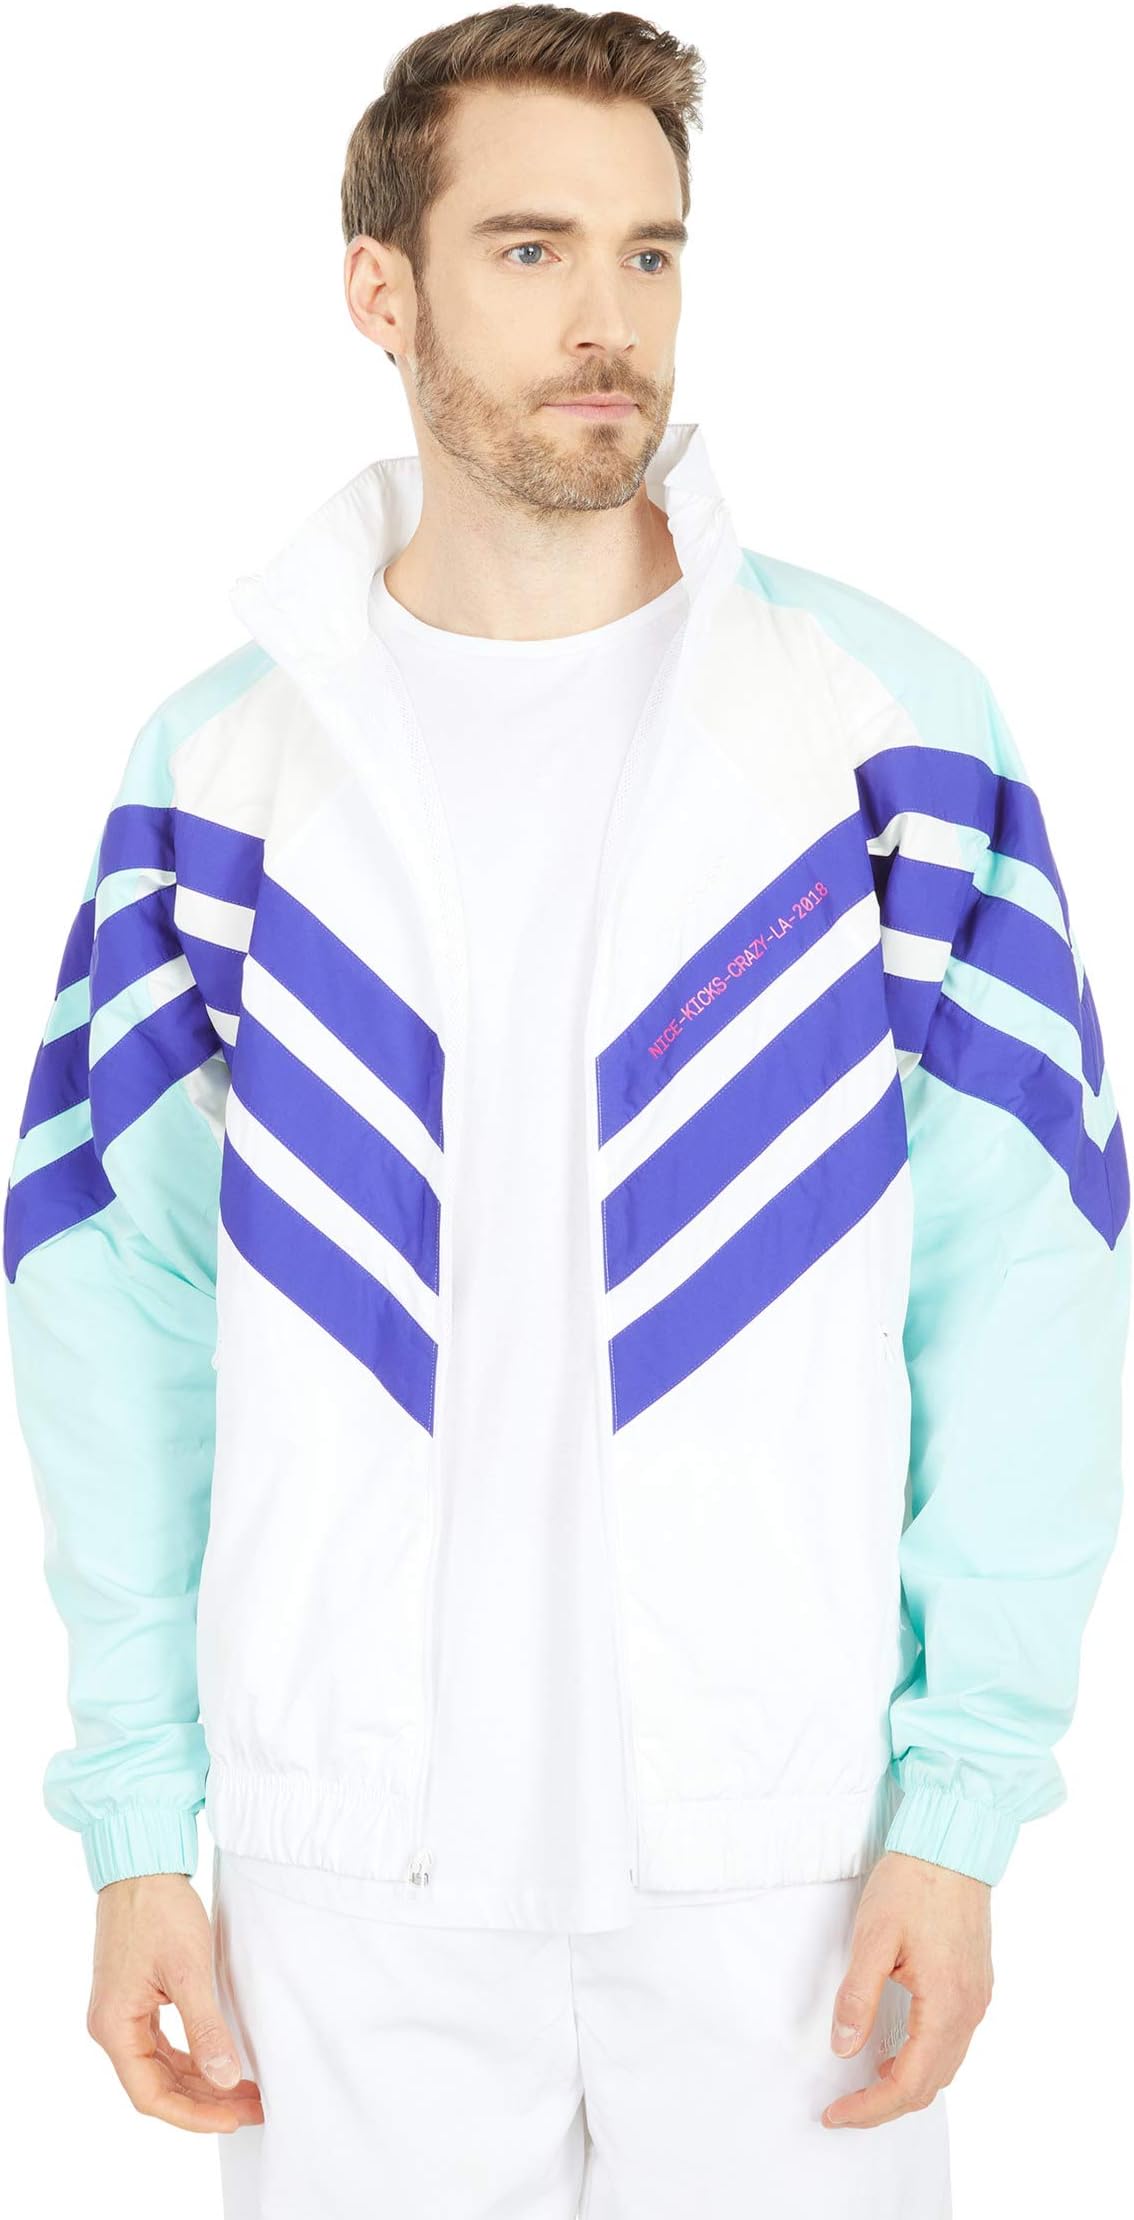 Куртка Tironti Track Top Ltd adidas, цвет White/Energy Aqua/Energy Ink пауэрбанк energy именной хищник